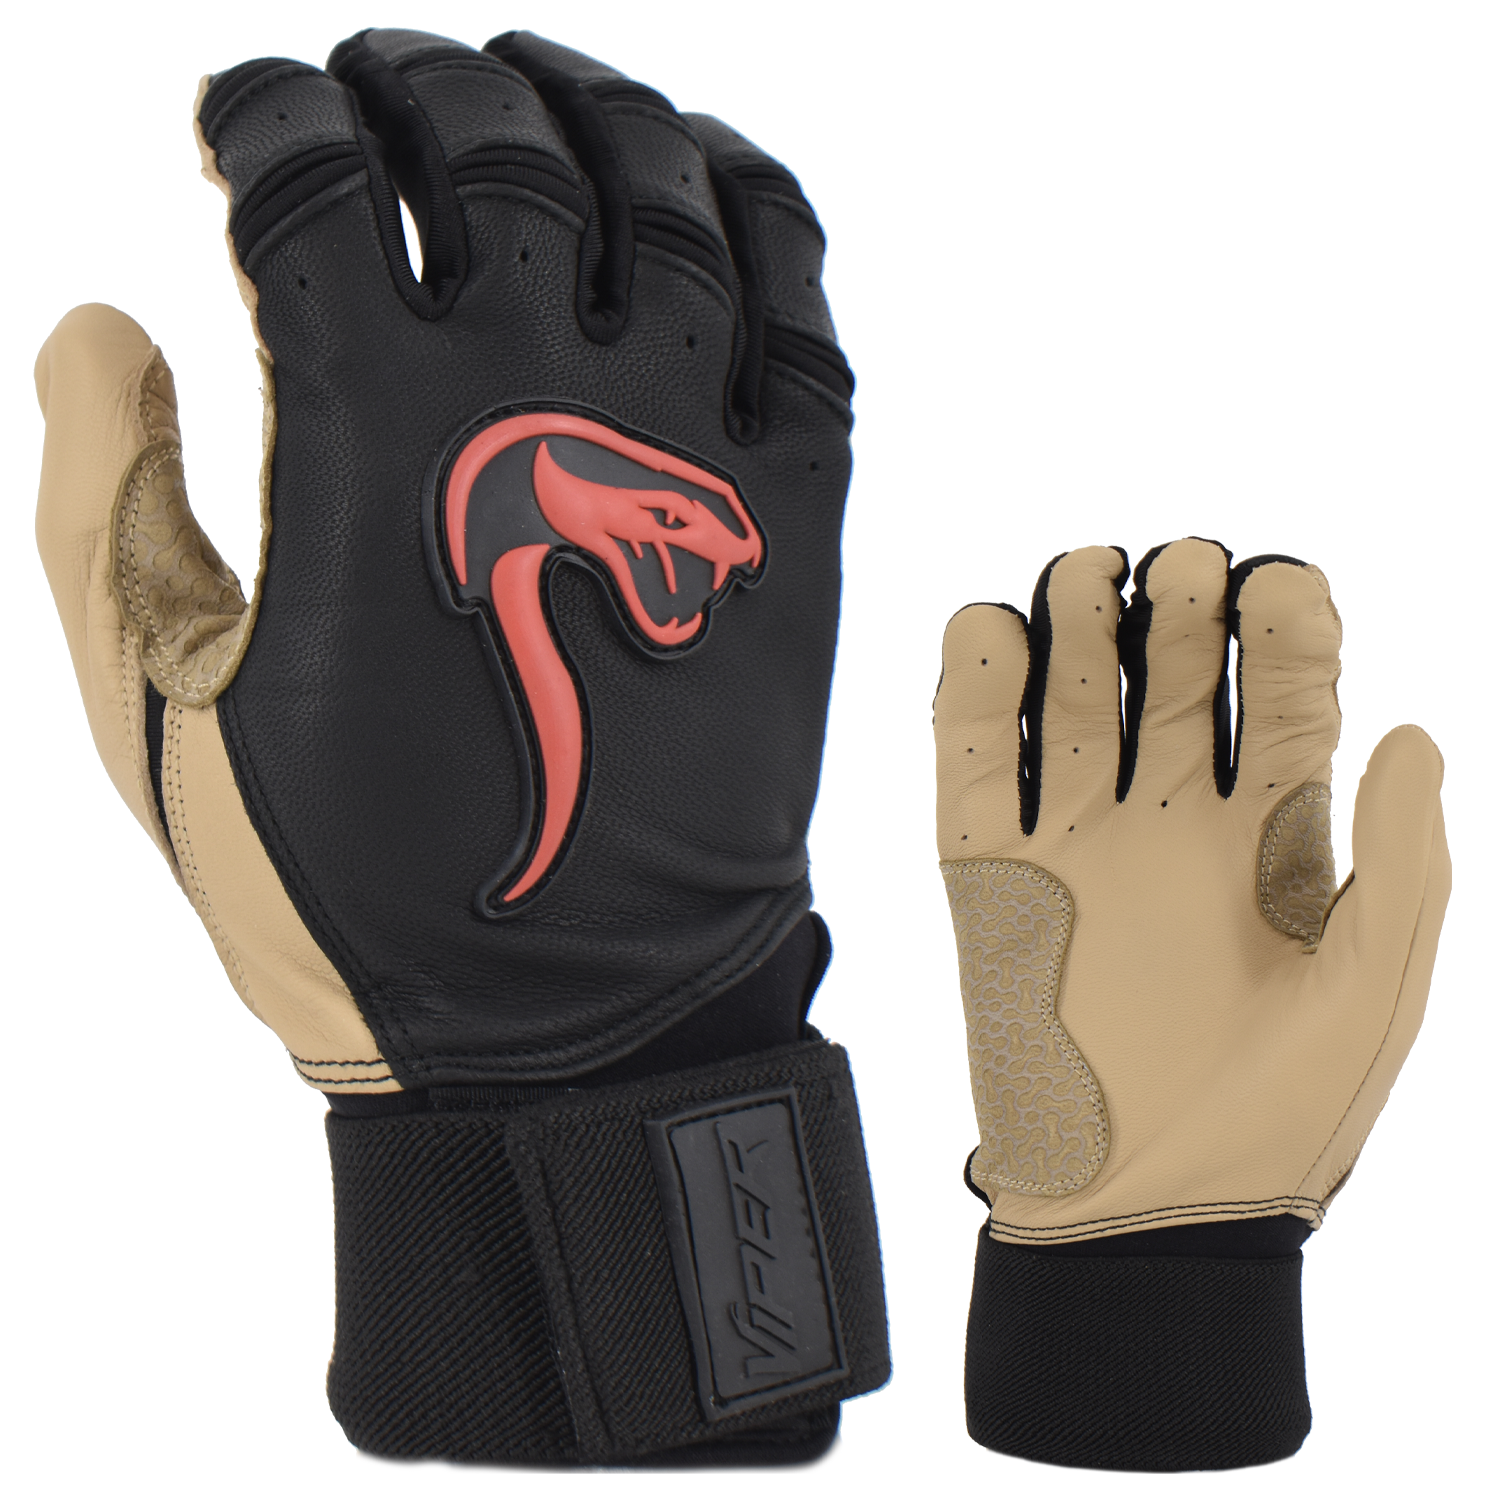 Viper Grindstone Long Cuff Batting Glove - Black/Tan